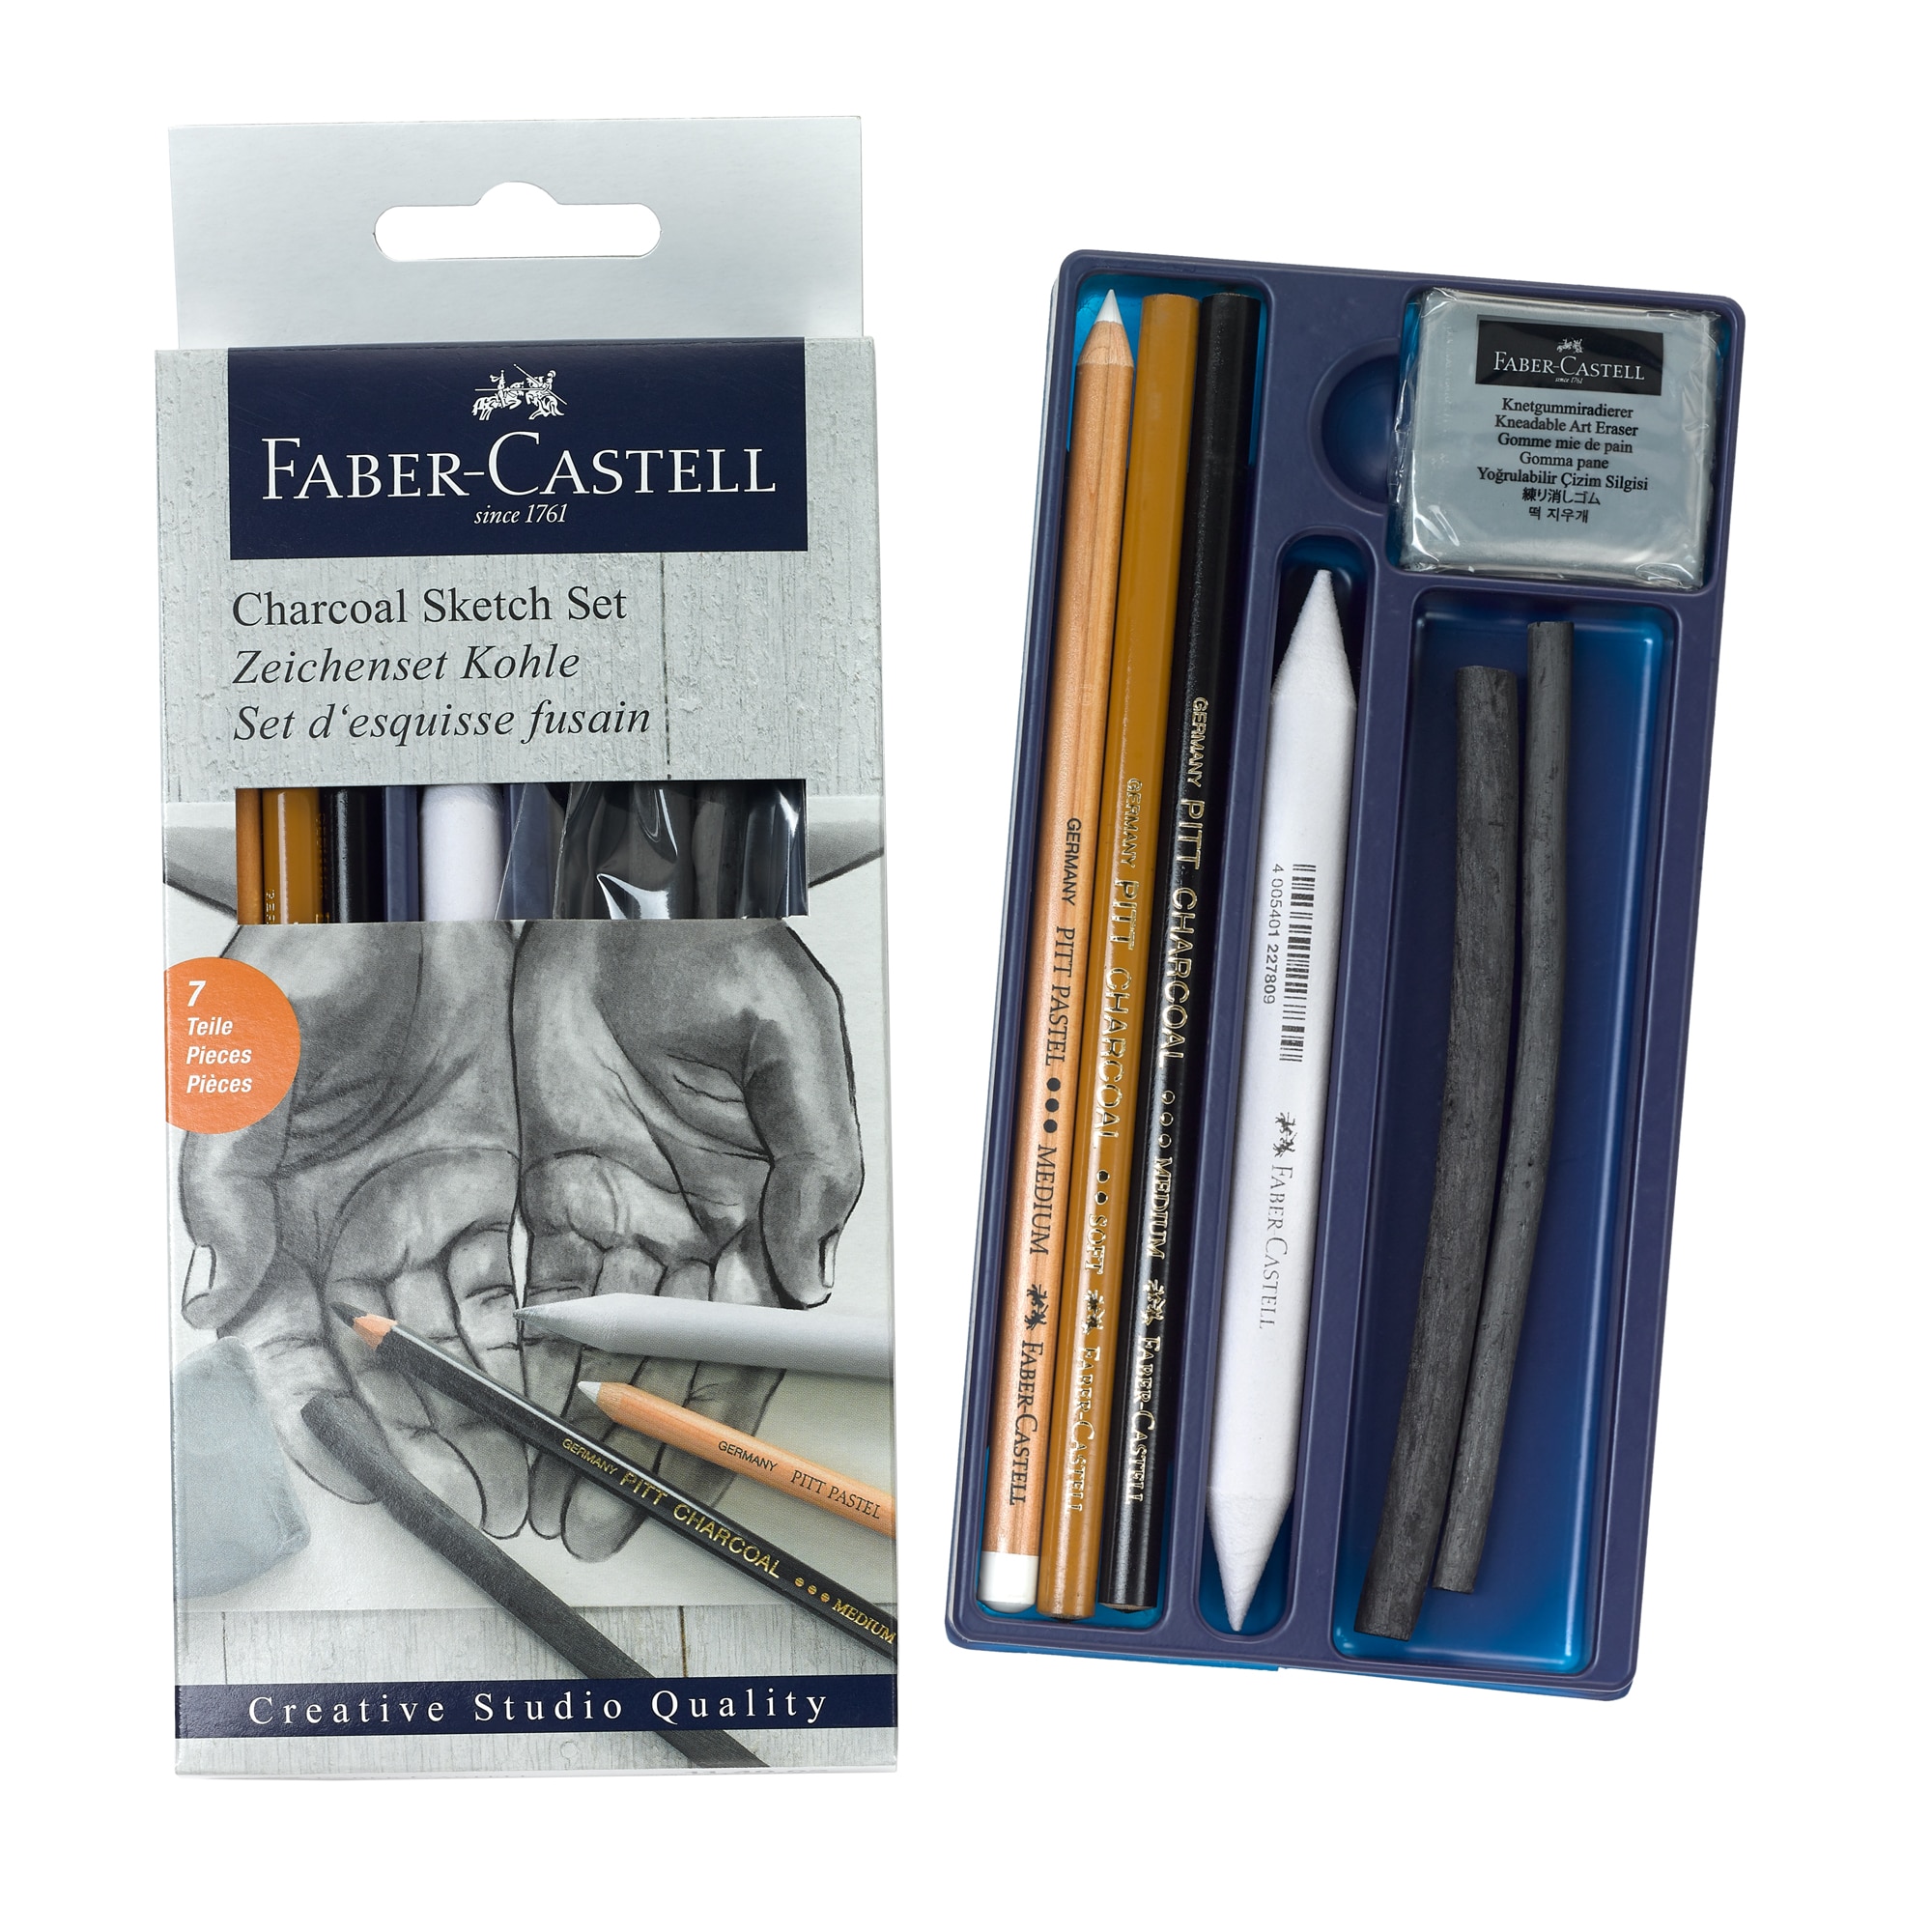 Faber-Castell Classic Sketch Set - 6 Piece Graphite & Pastel